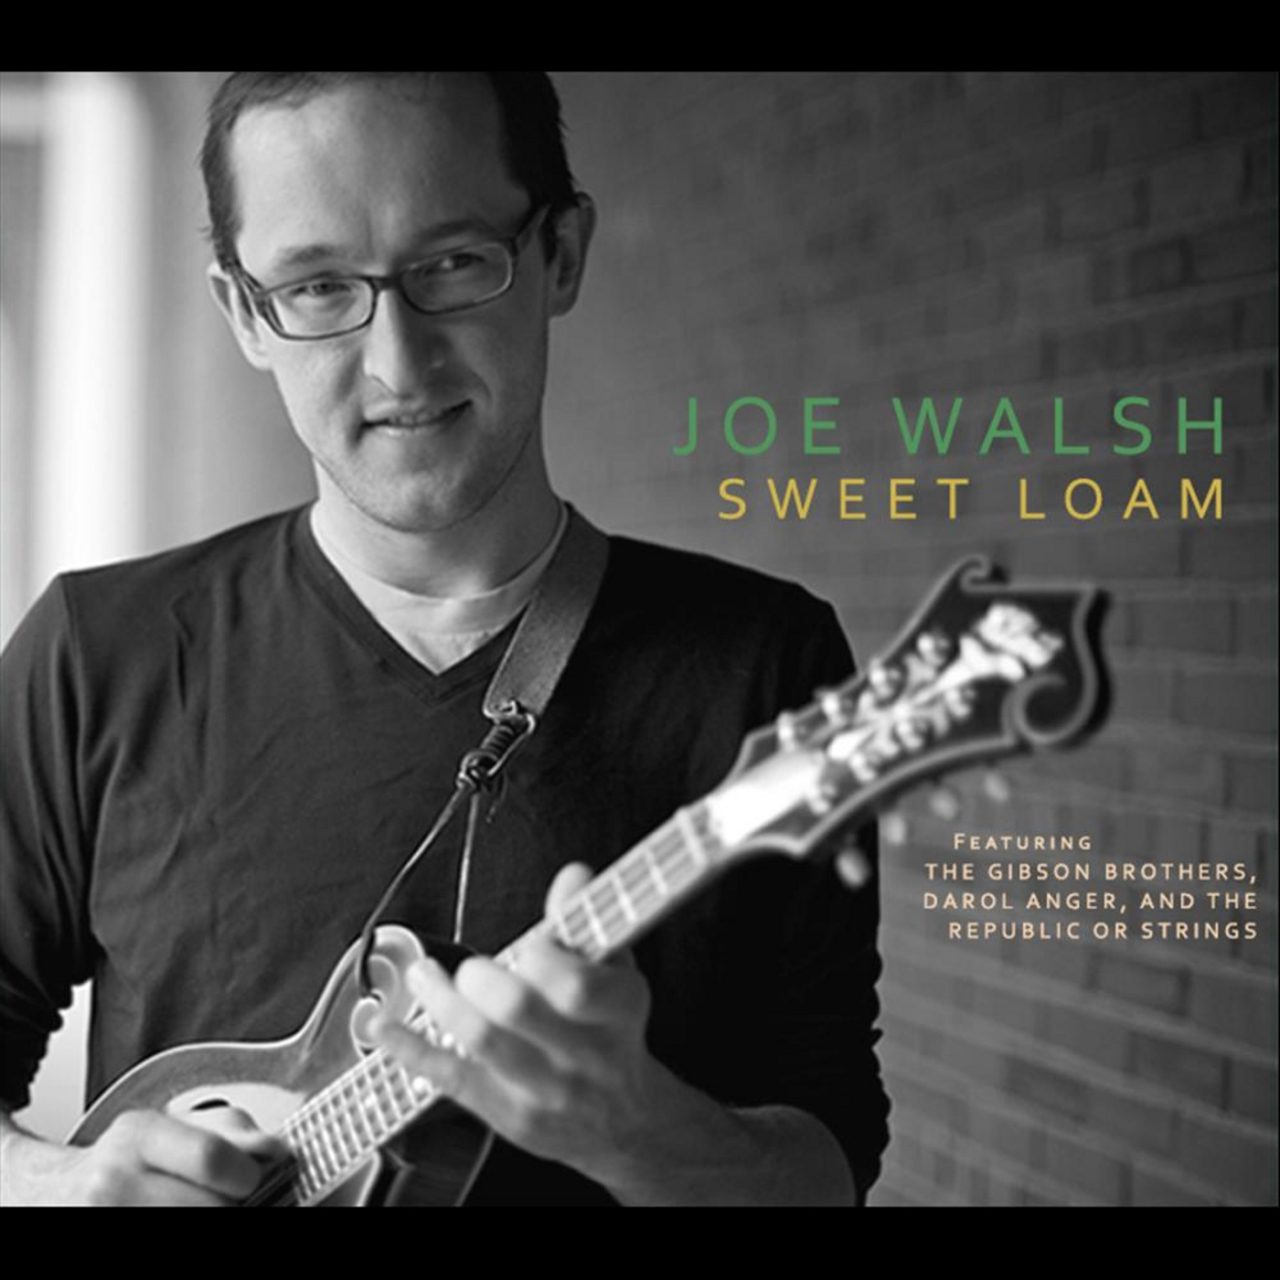 Joe Walsh - Sweet Loam cover album